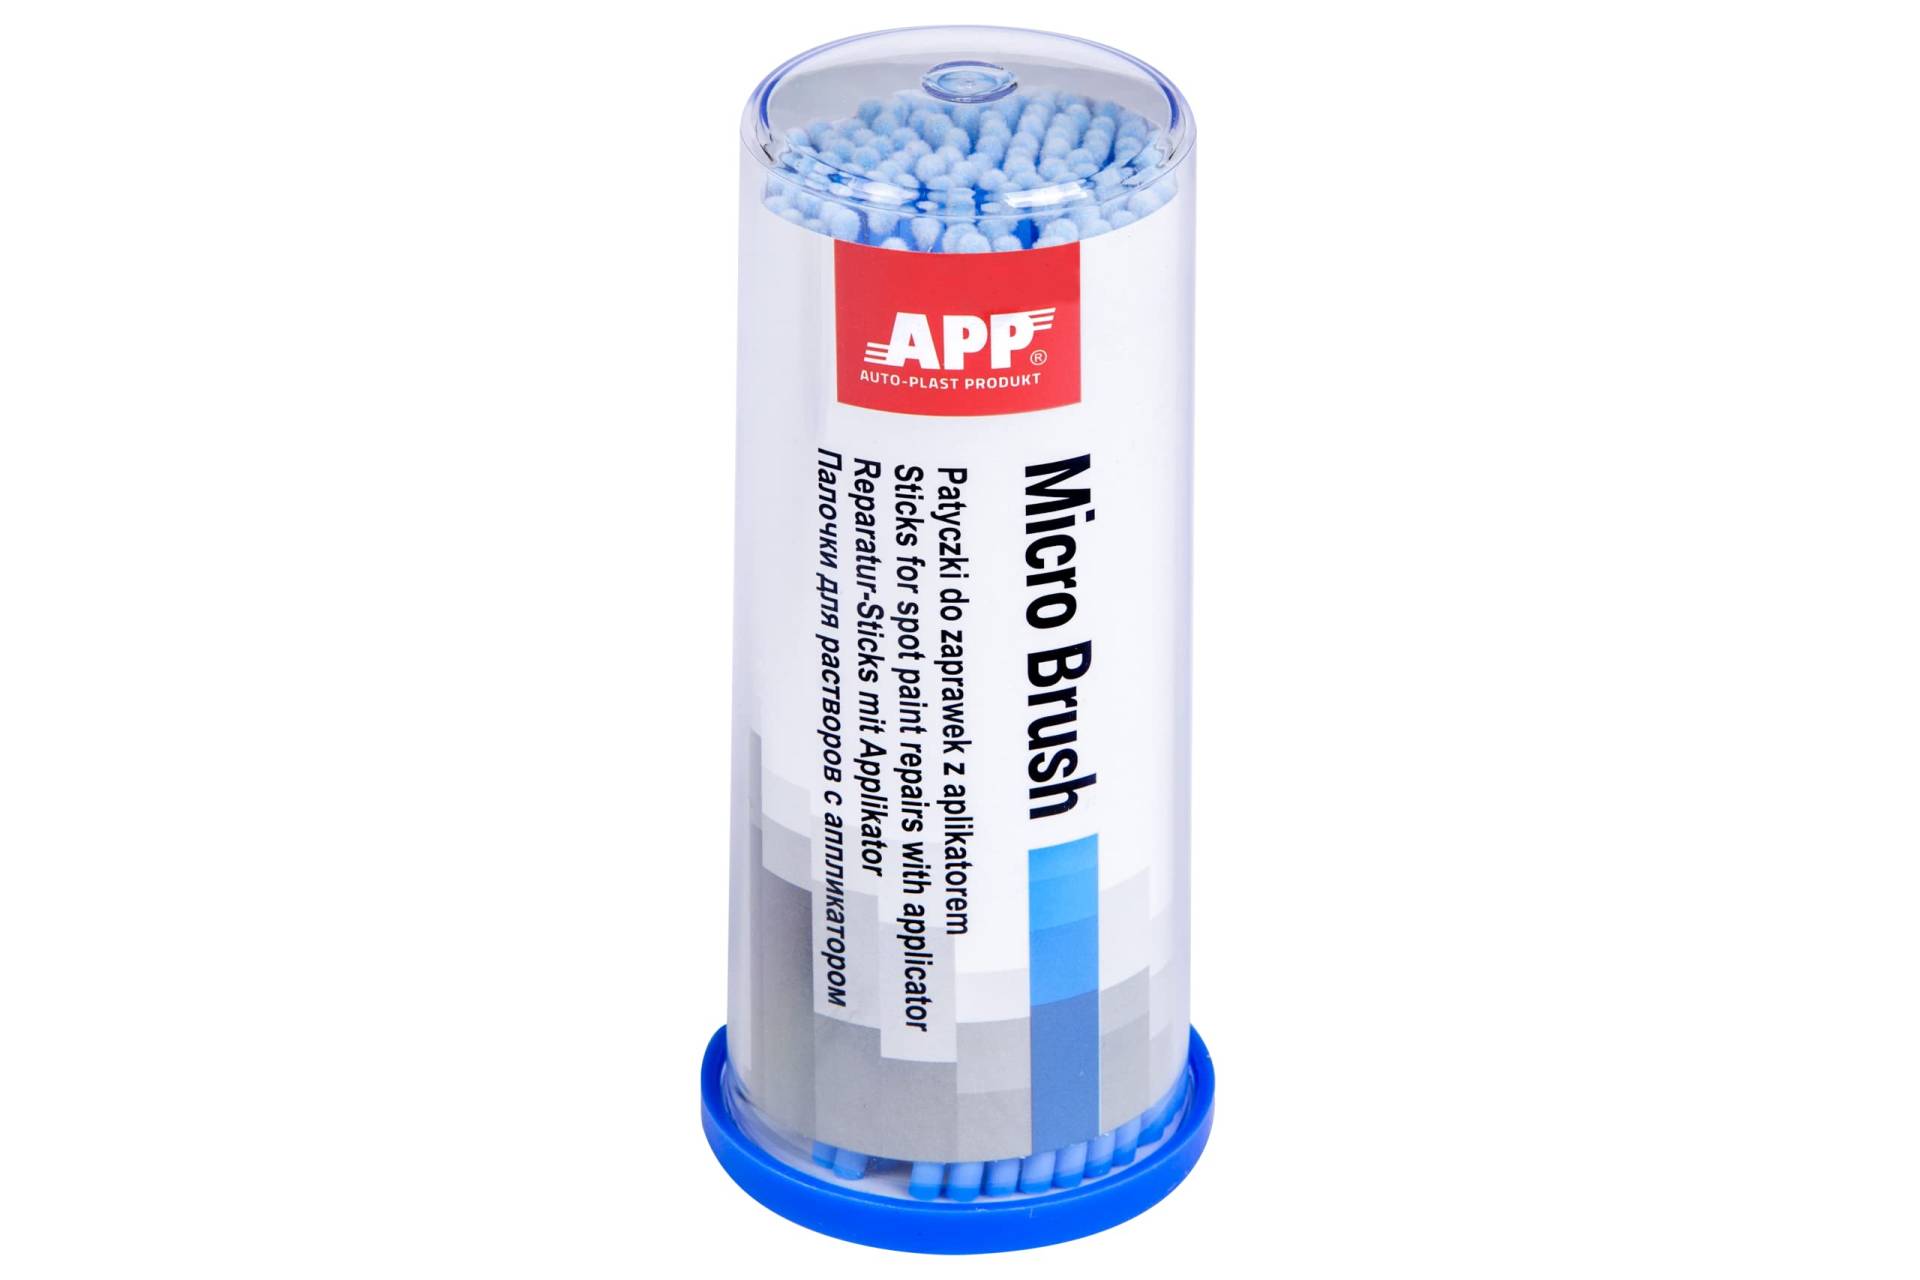 AUTO-PLAST PRODUKT APP Micro Brush - Lackstifte mit Applikator | Lacktupfer | blau | 2,0 mm | 100 Stück von AUTO-PLAST PRODUKT